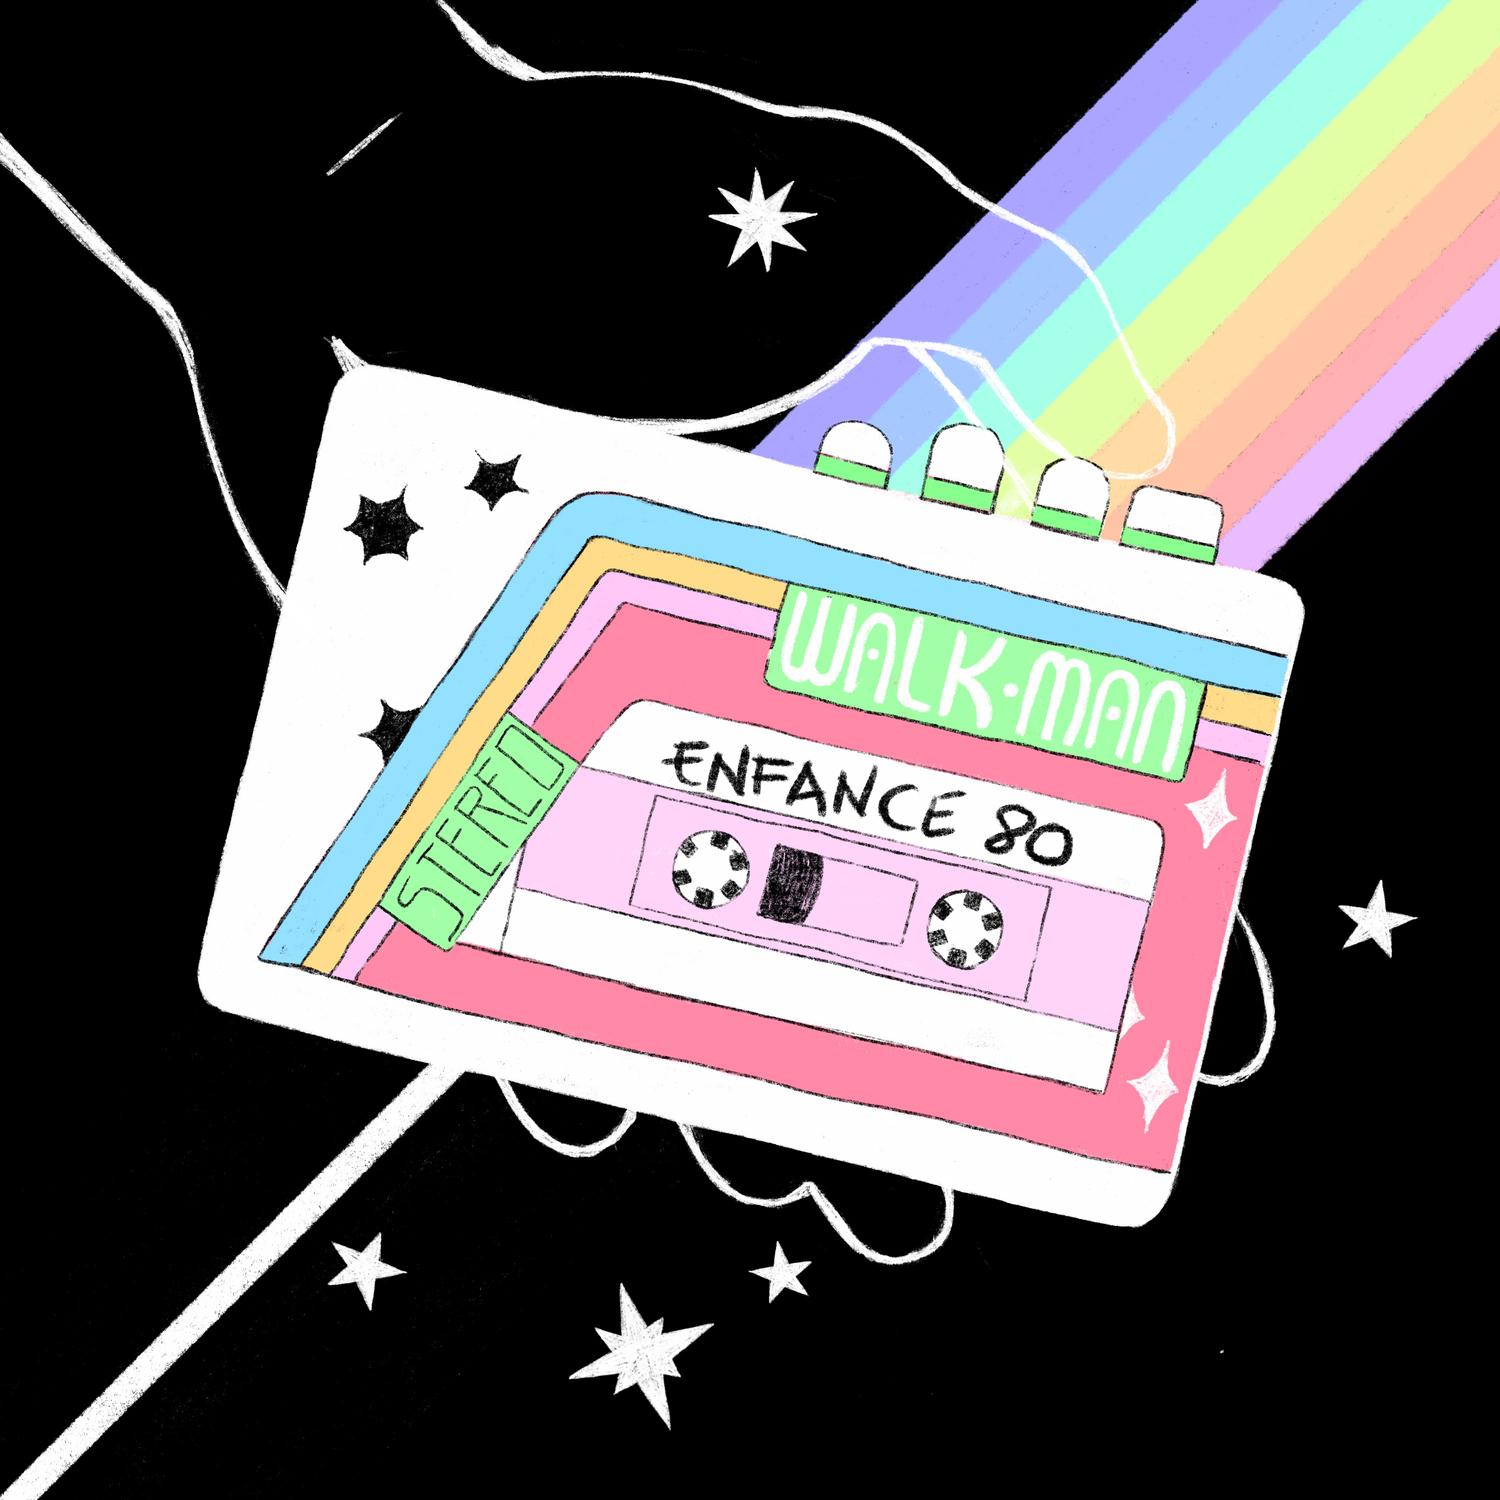 Videoclub — Enfance 80 cover artwork